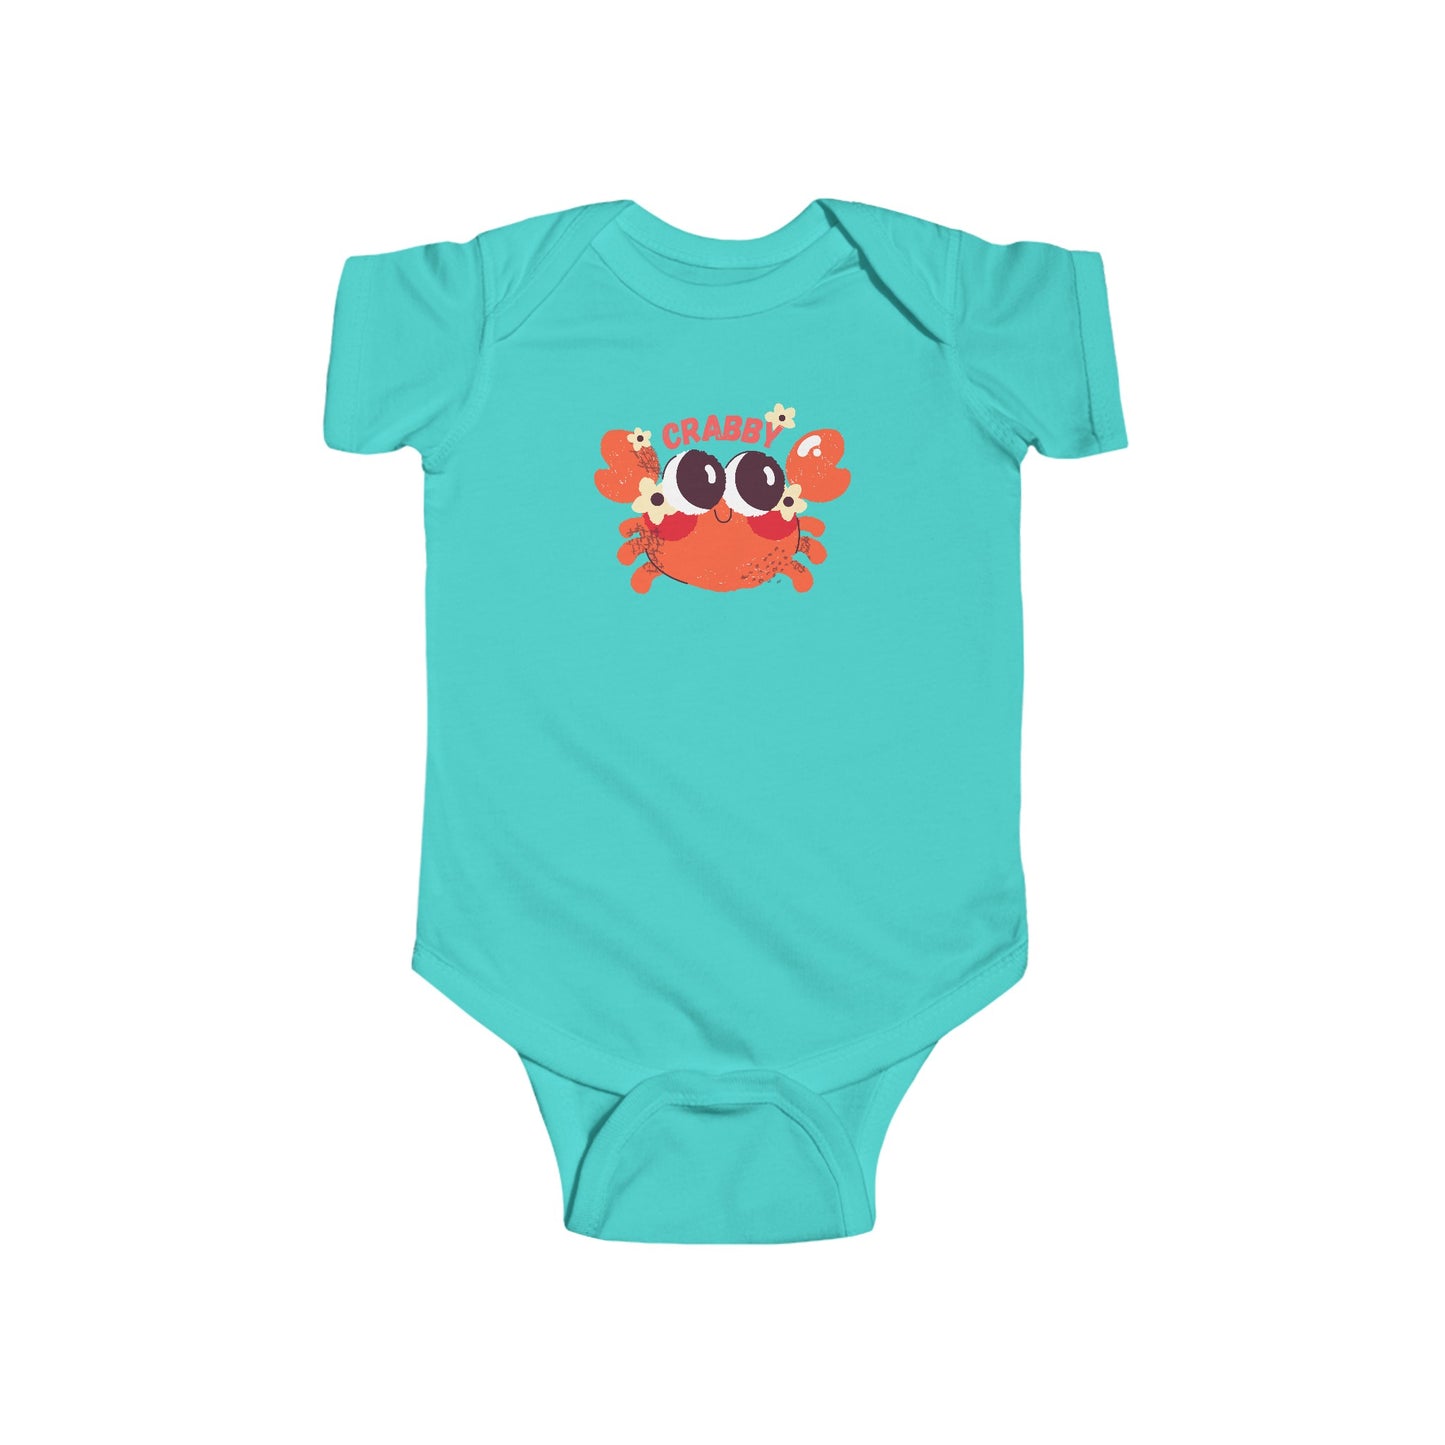 Crabby Baby Bodysuit